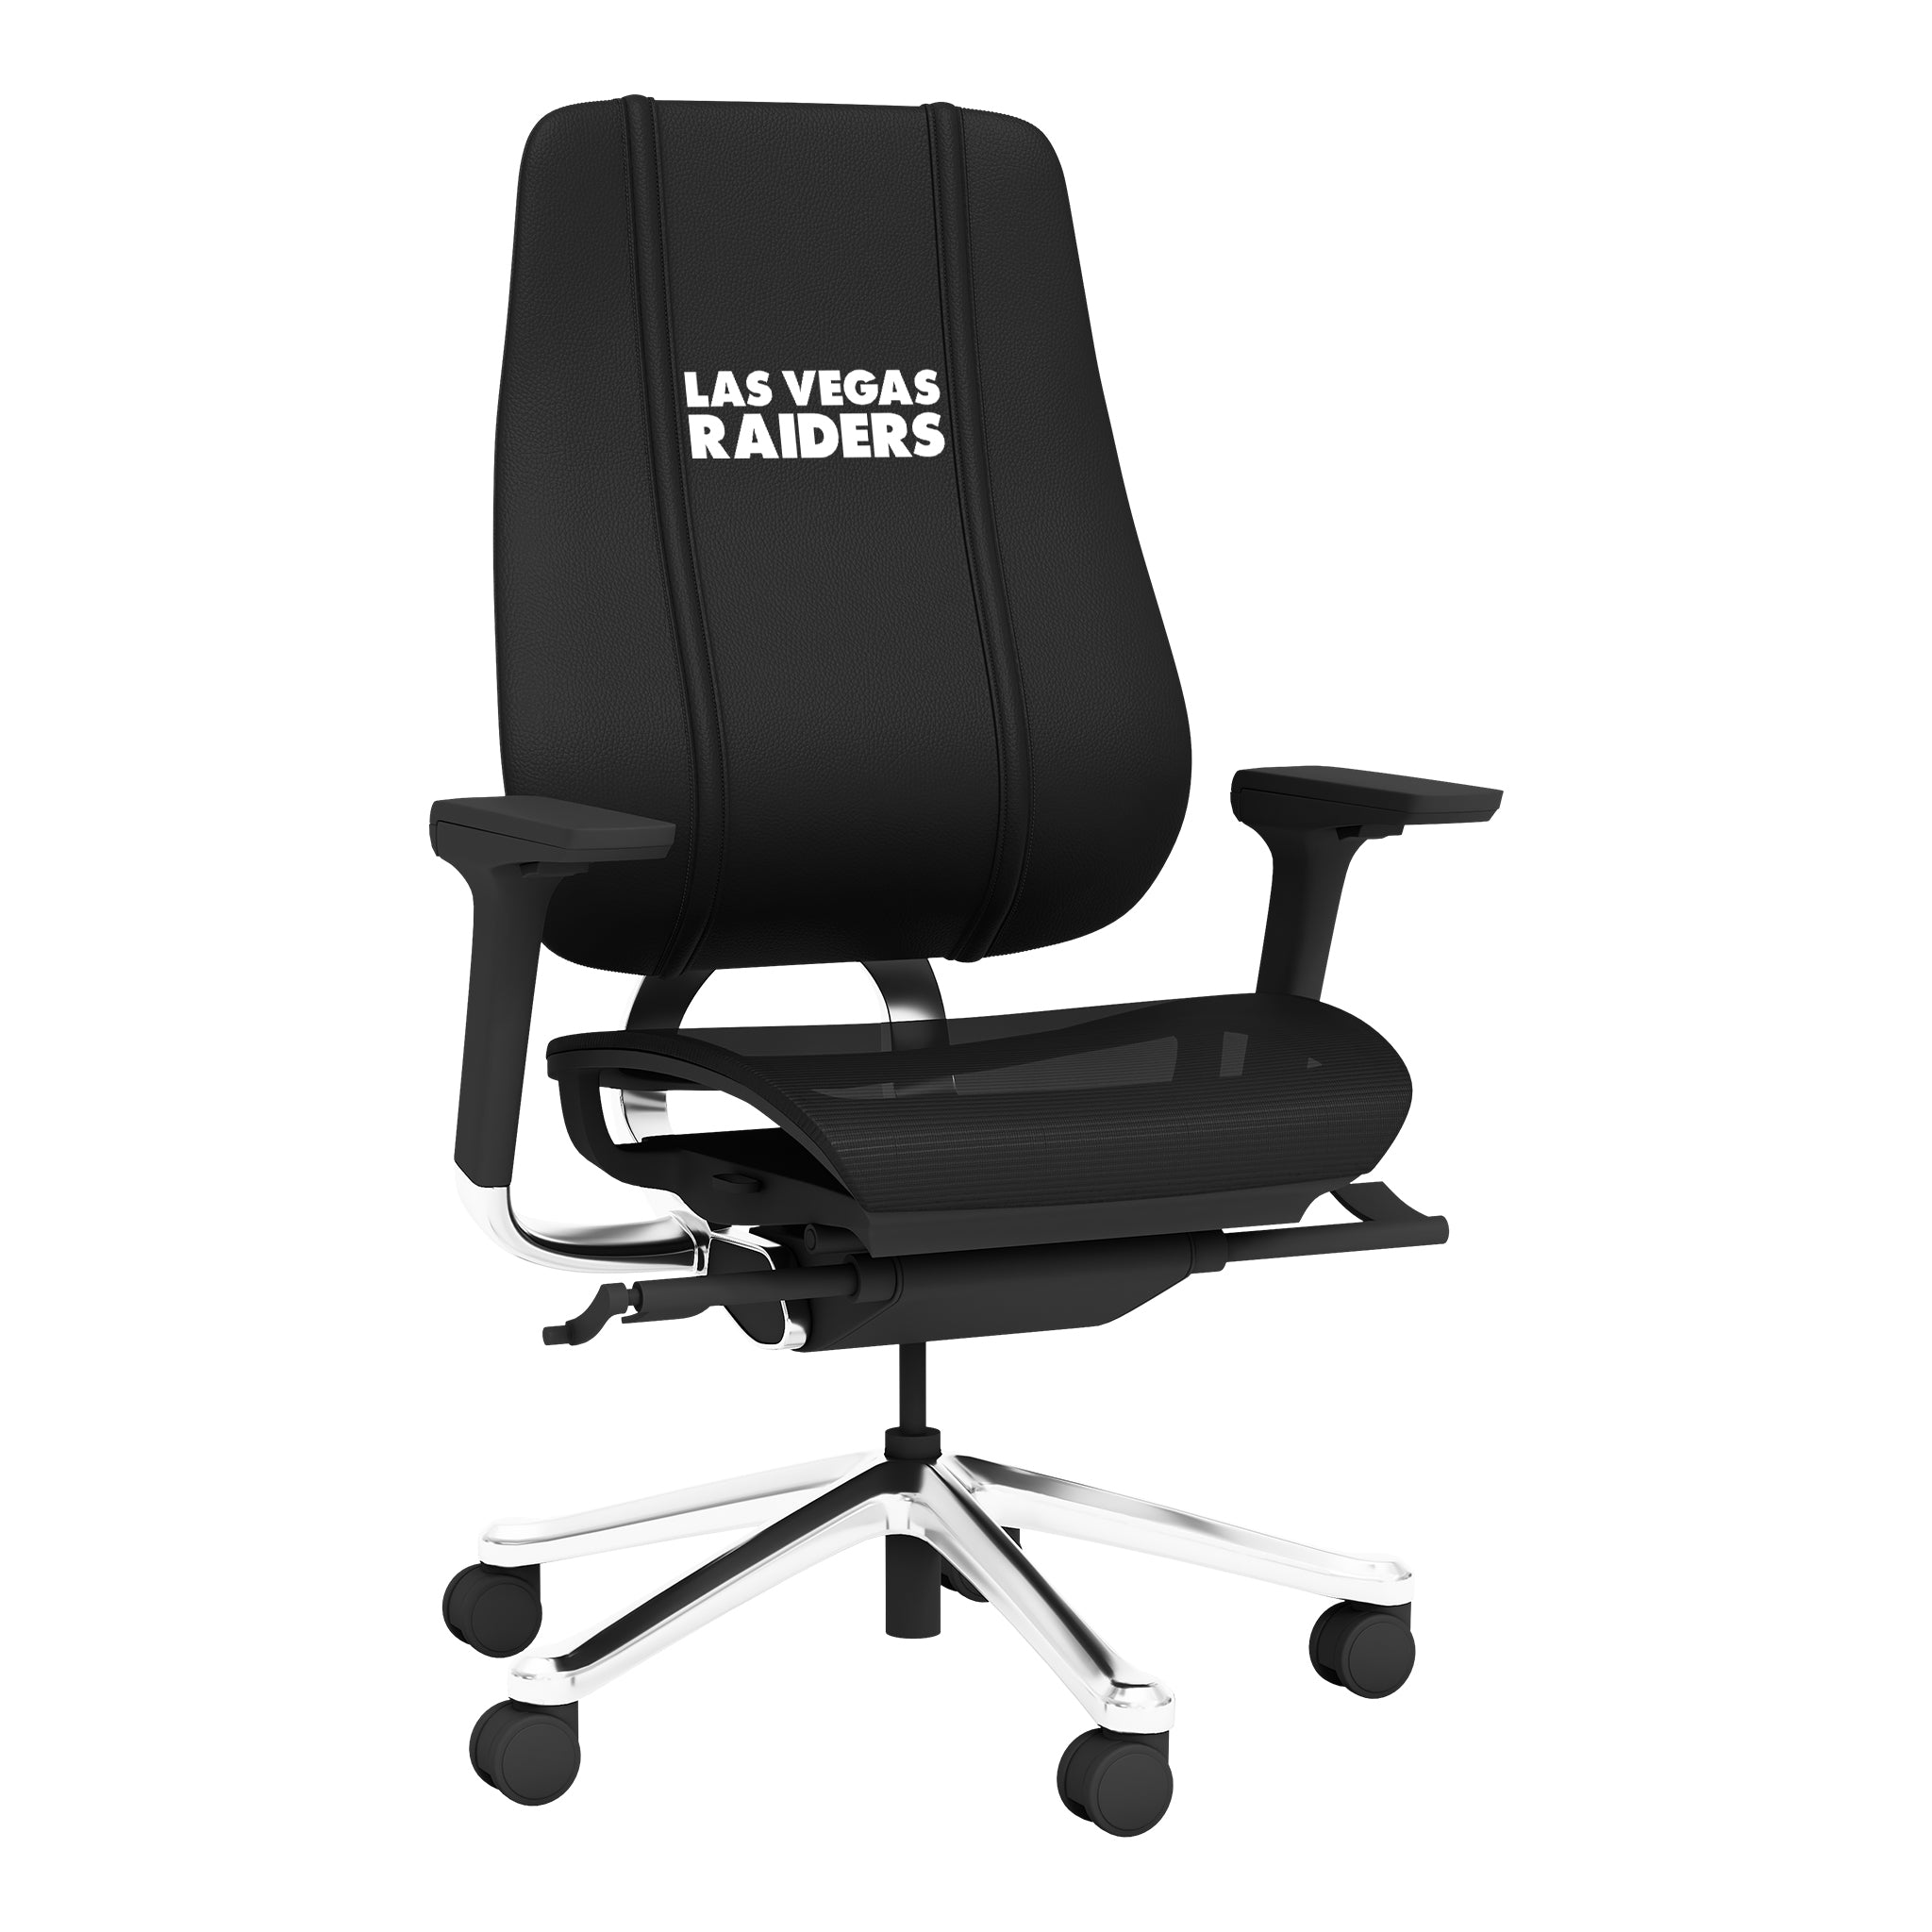 Las Vegas Raiders PhantomX Chair - Office - Home